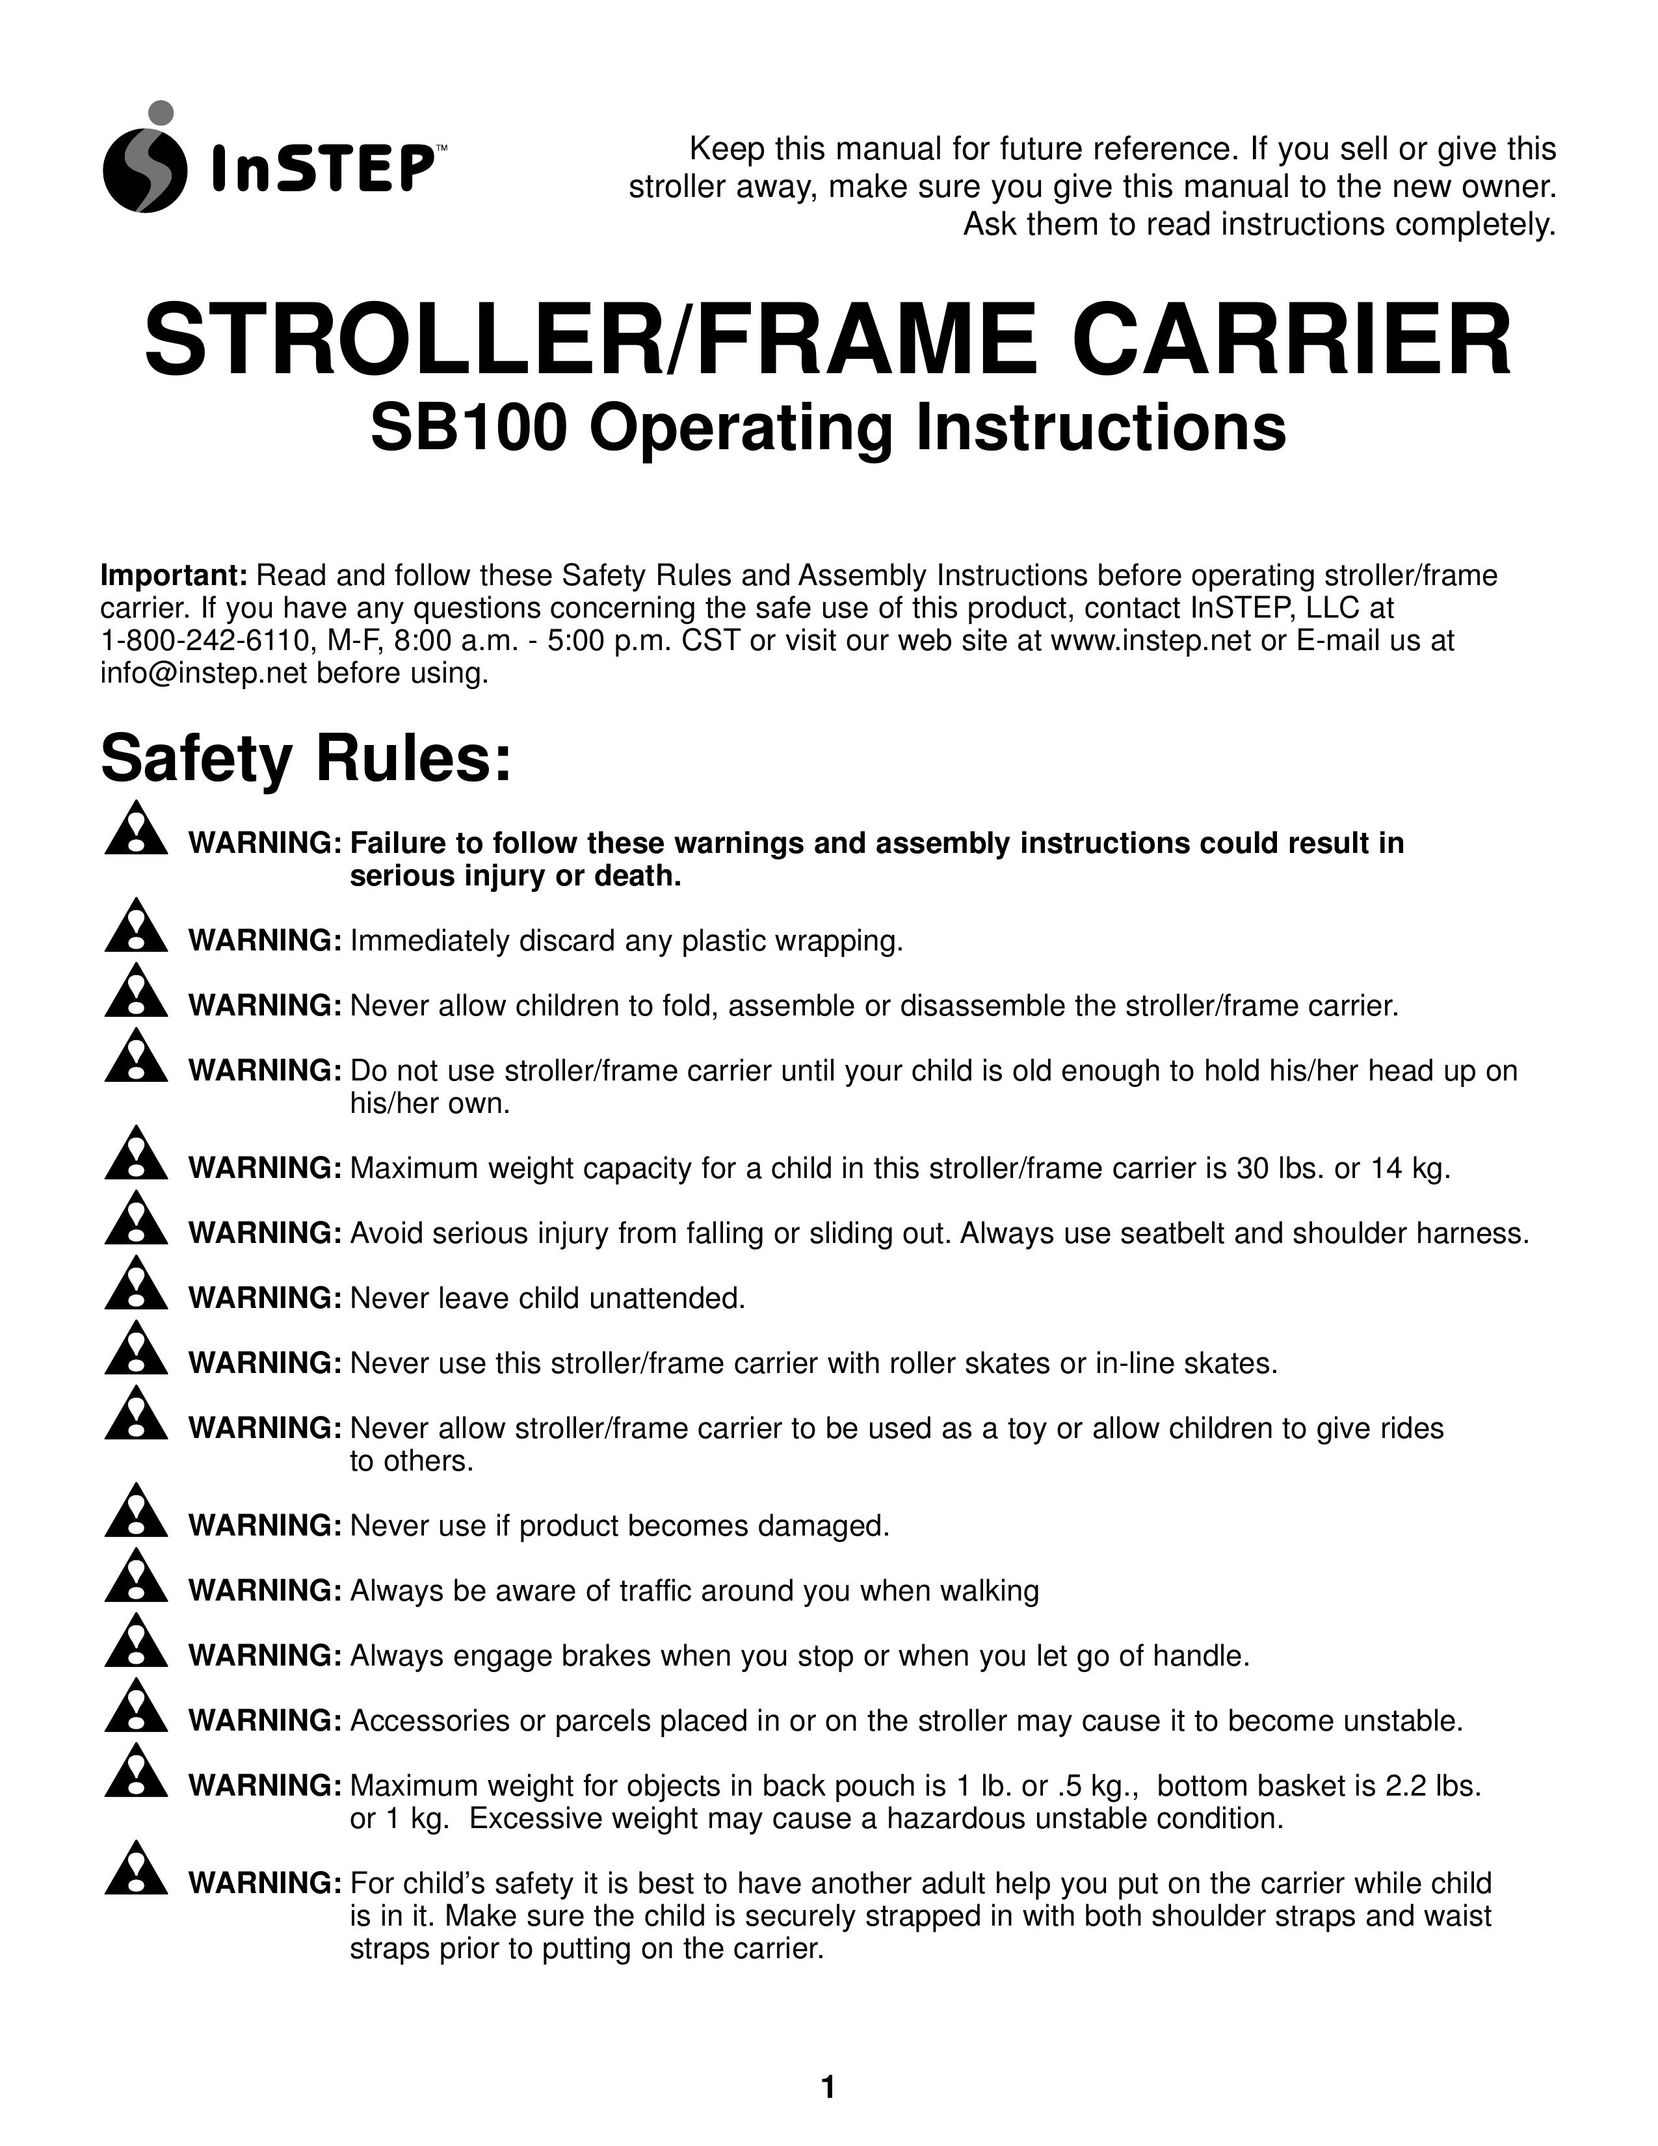 InStep SB100 Stroller User Manual